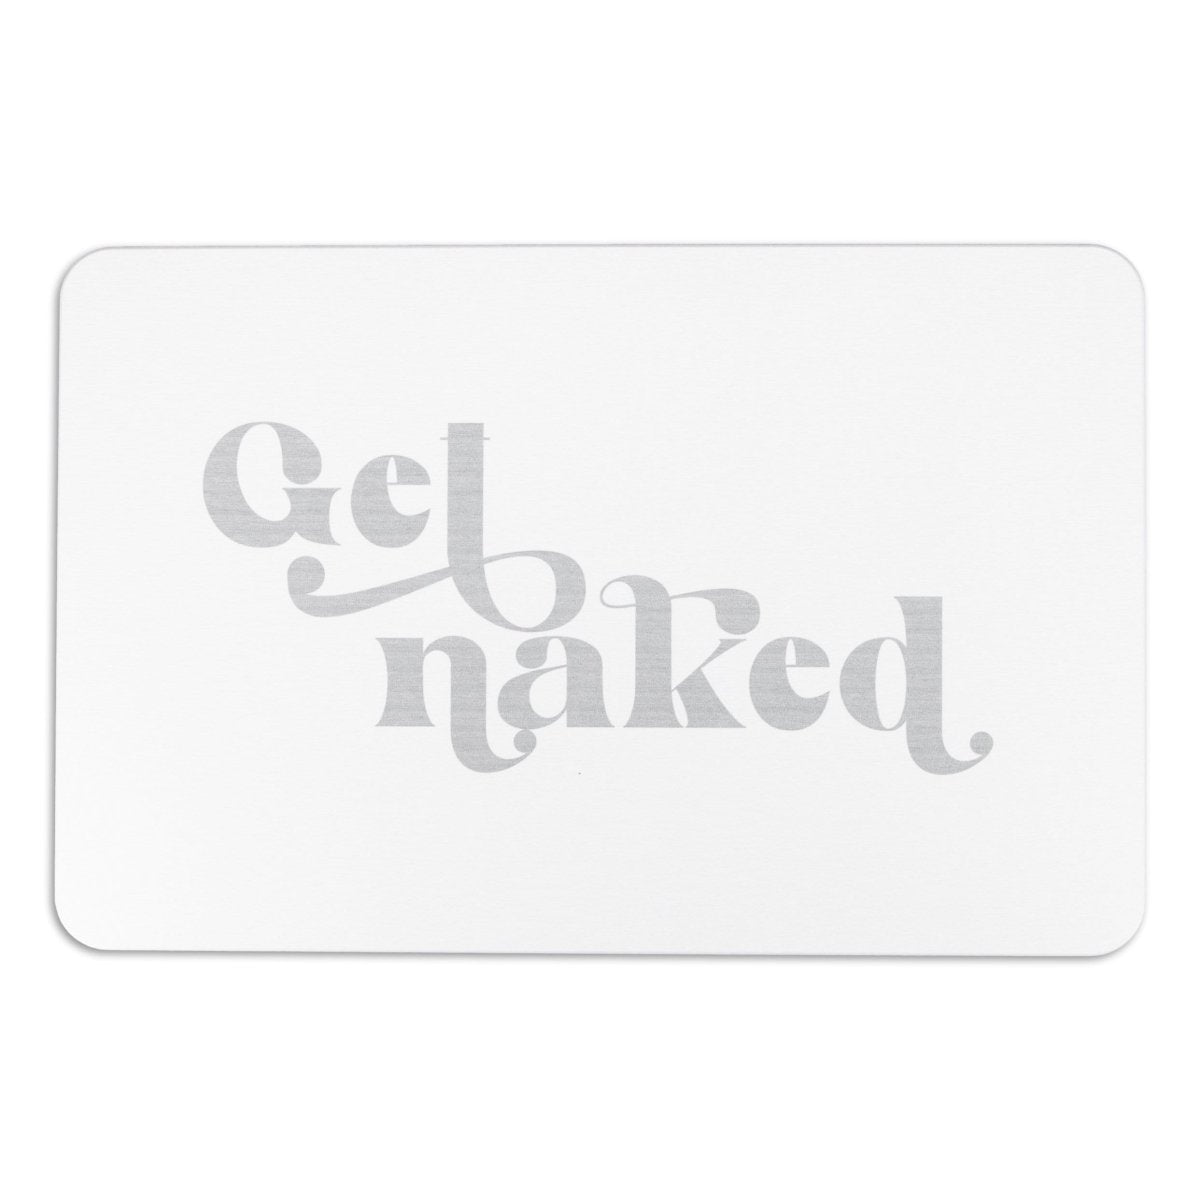 Get Naked Bathmat - Grey Stone Non Slip Bath Mat - Cute Bathroom Decor - Housewarming Gift - Funny Wedding Gift - 39 X 60Cm - Slips Away - 1330568214 -